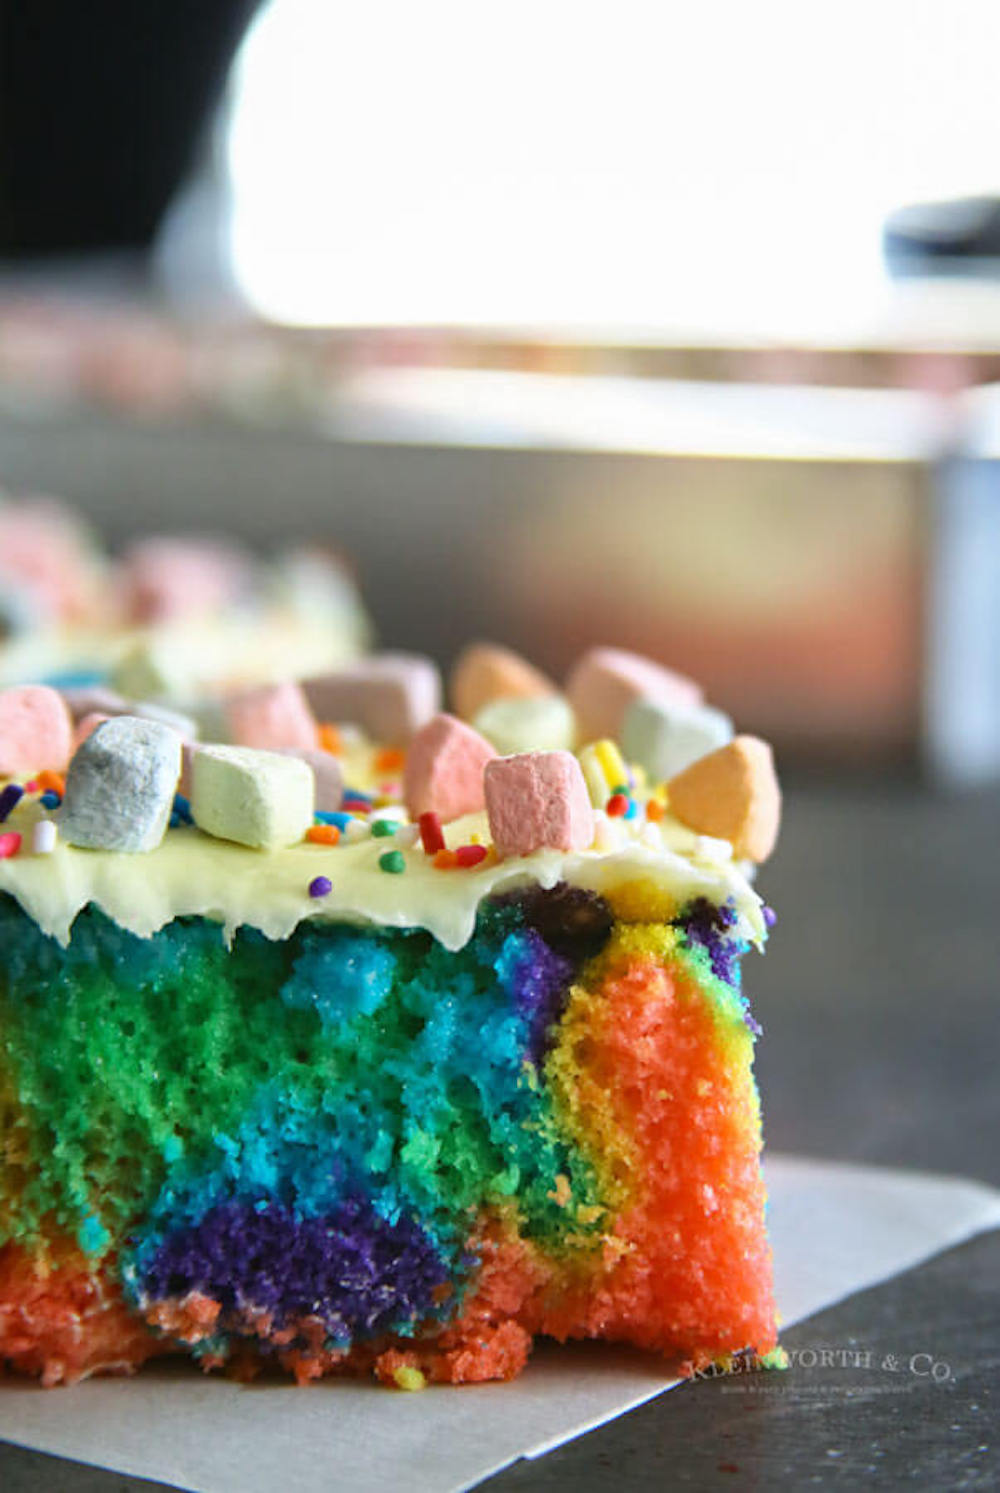 Best sheetcaking recipes: Rainbow cake at Kleinworth & Co